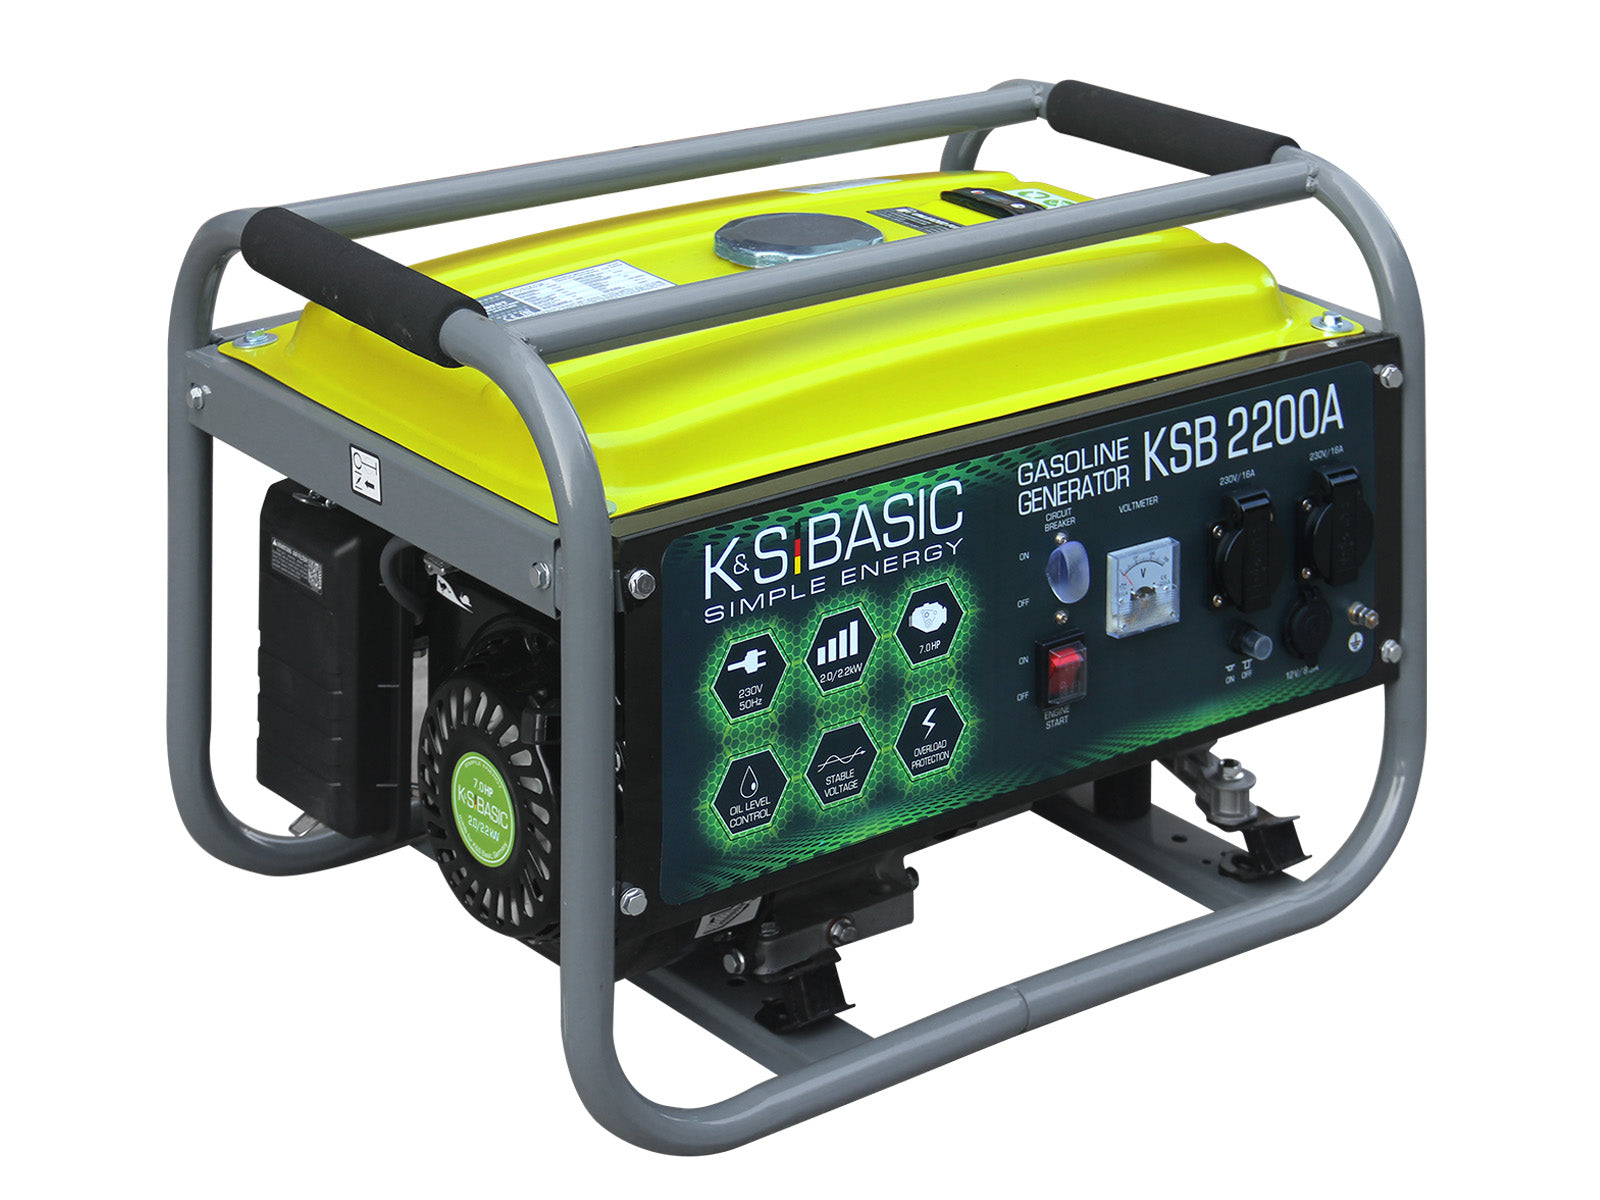 Benzinegenerator 'K&S BASIC' KSB 2200A